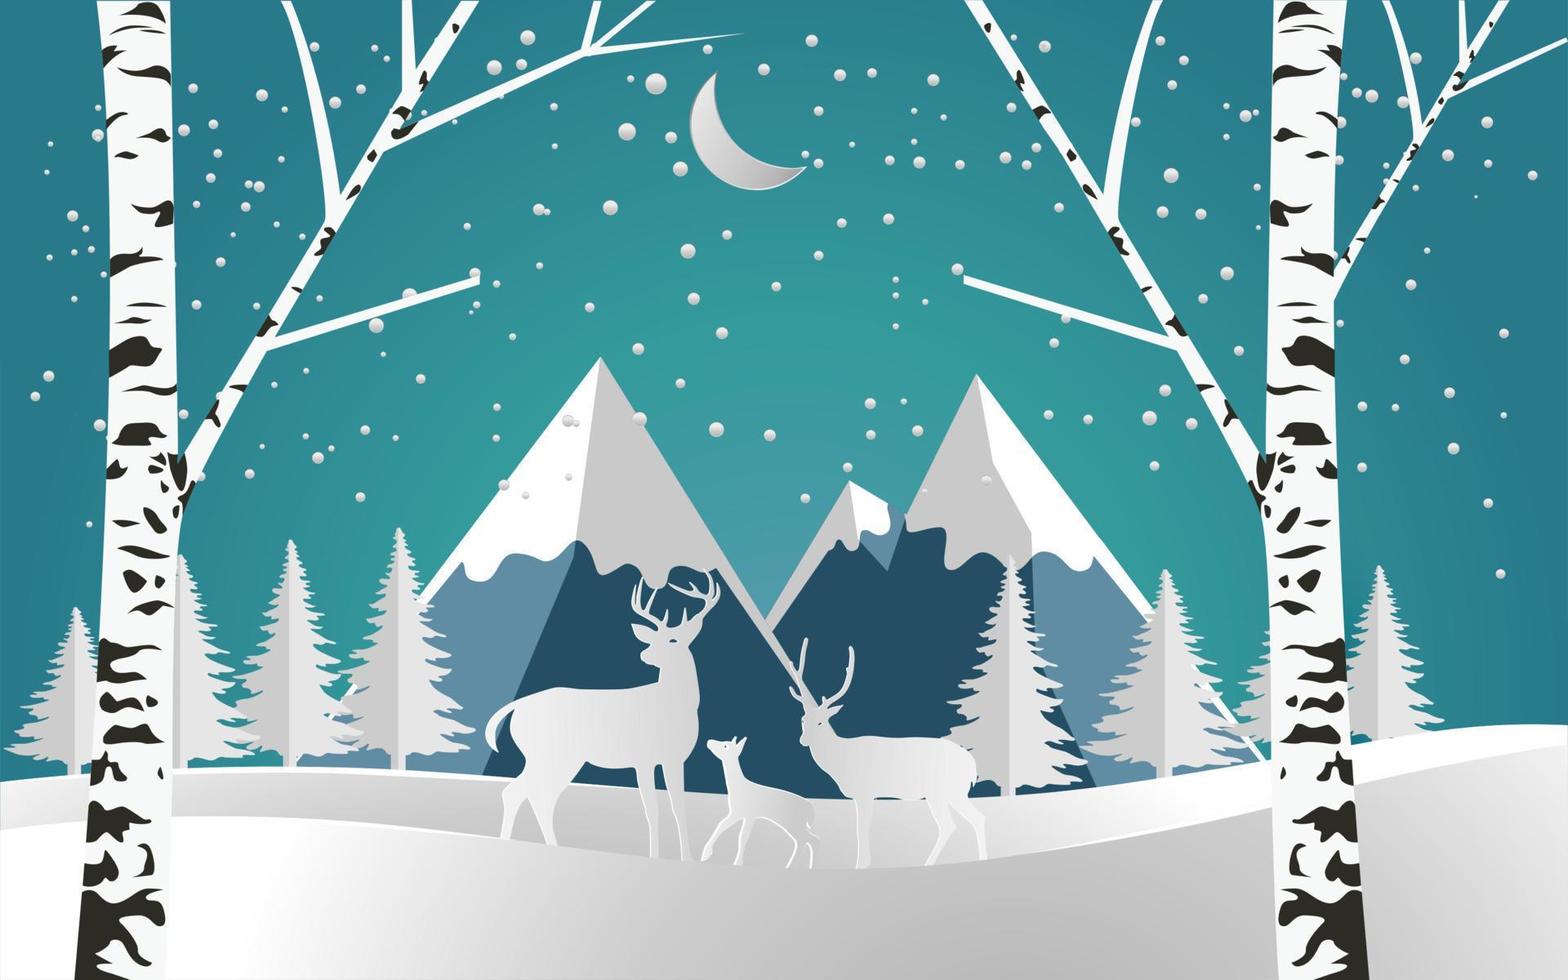 Deer in the snowy forest. paper art design vector